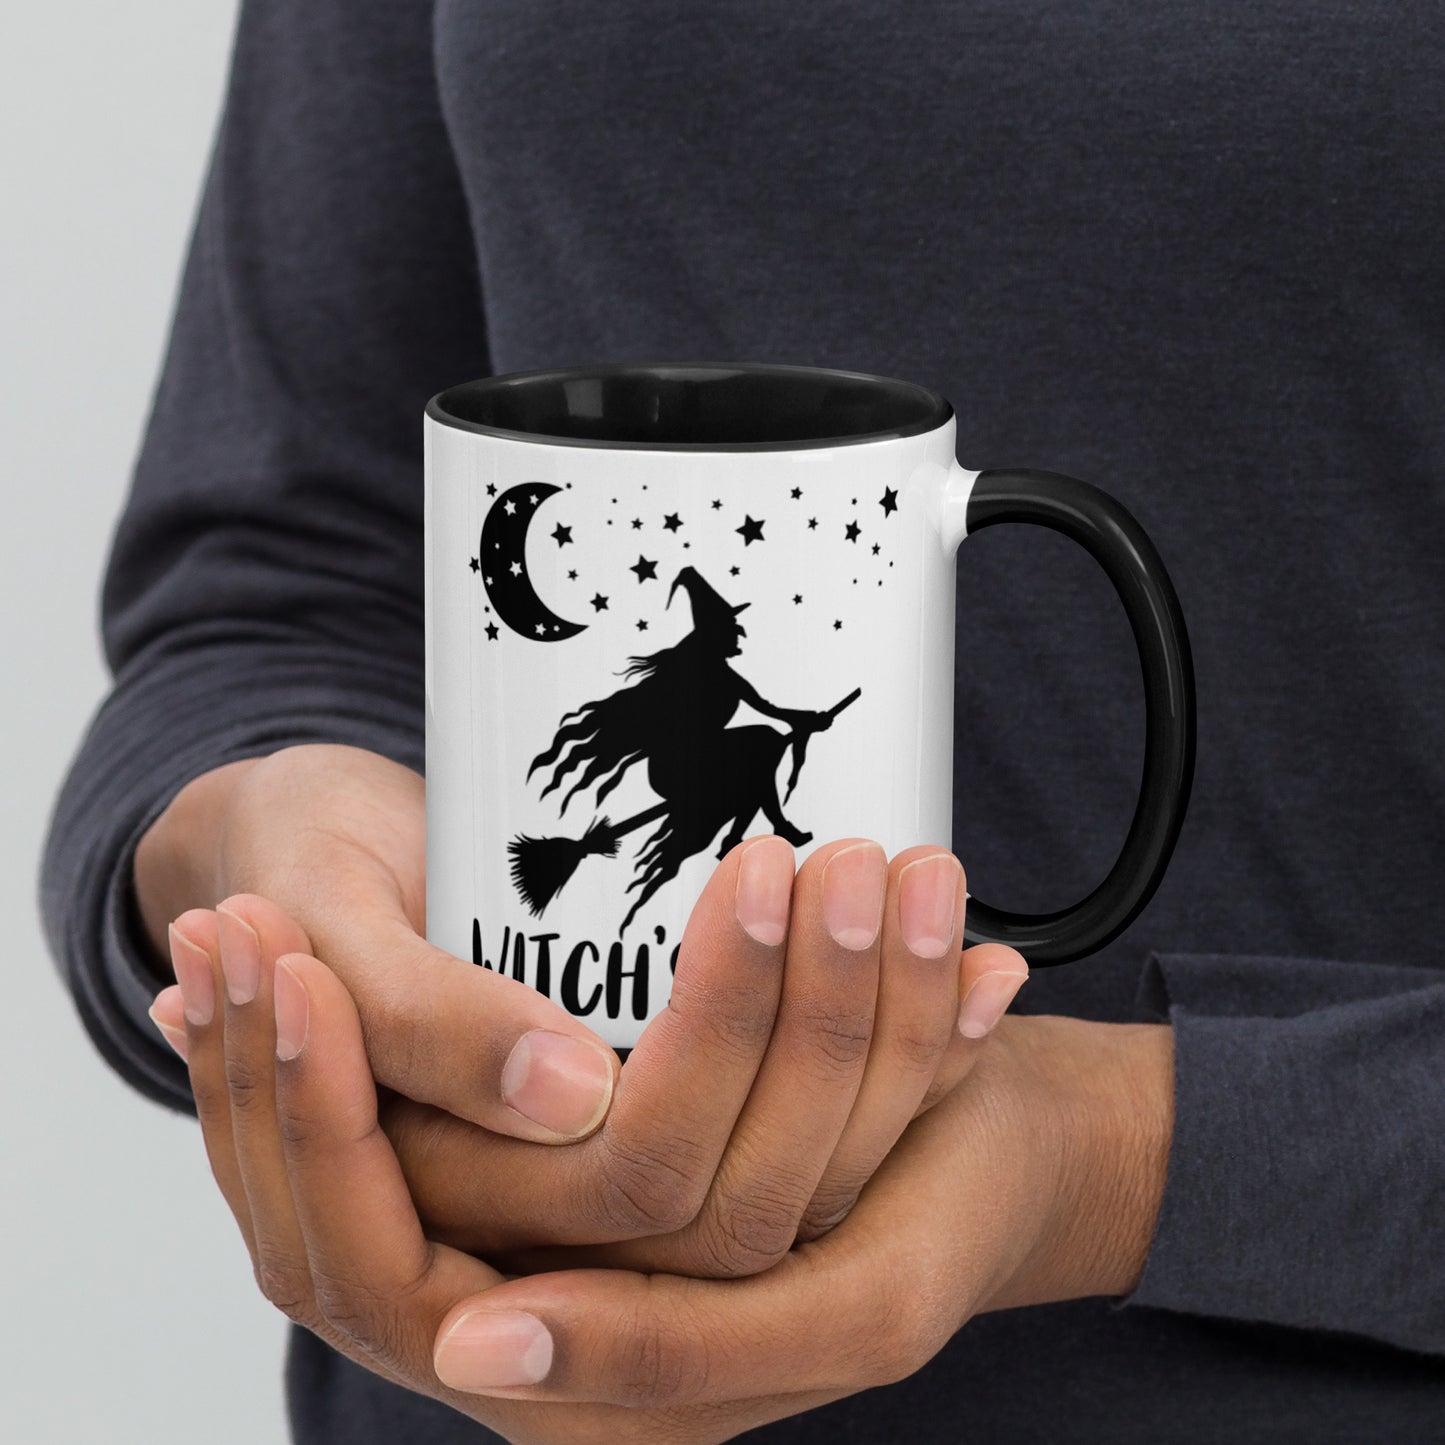 Witch's Brew Ceramic Mug with Color Inside